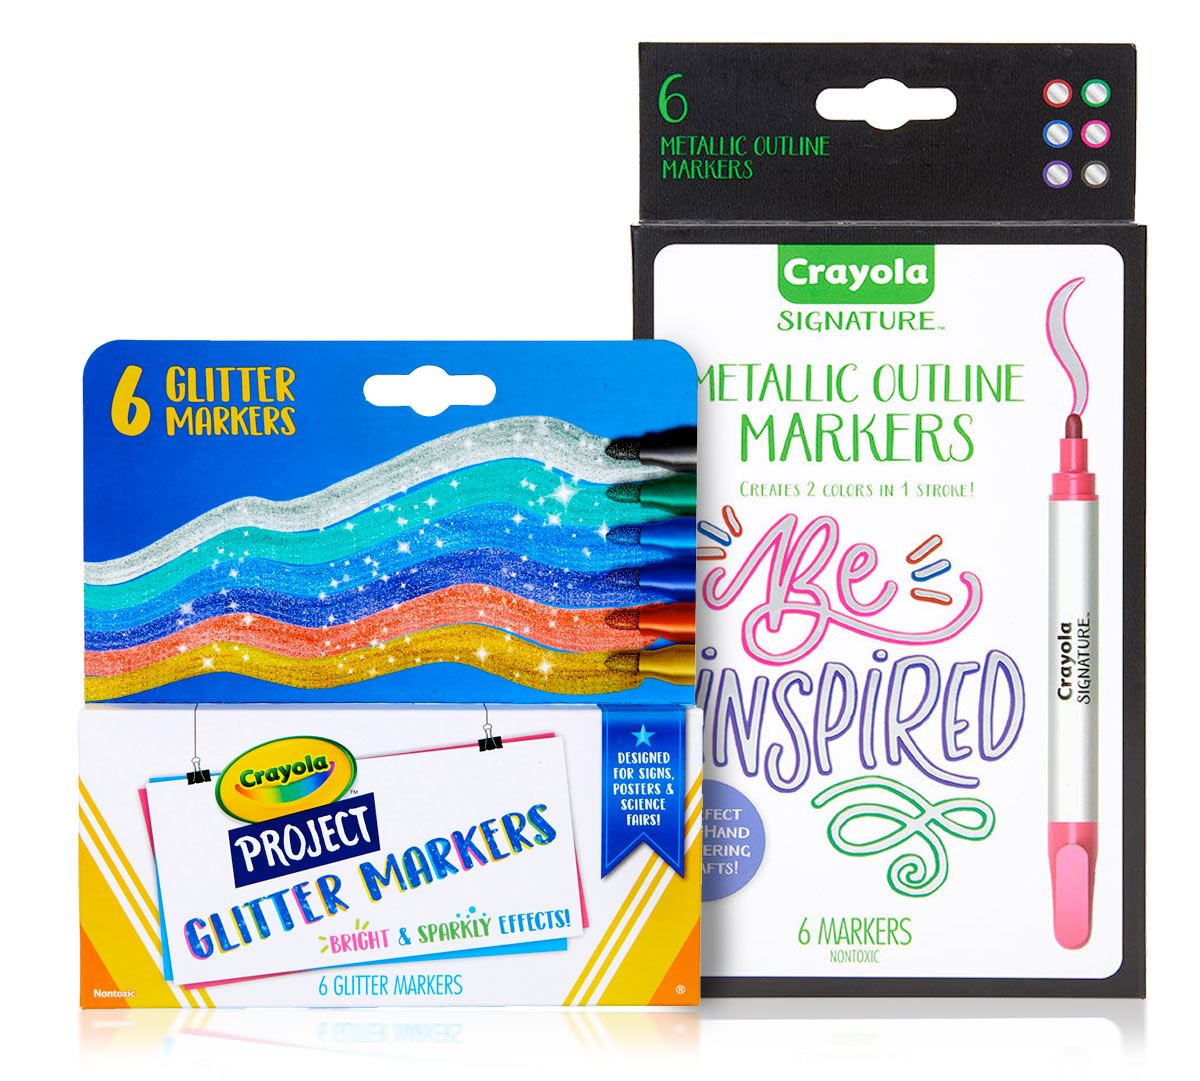 Metallic Outline Markers & Glitter Marker Set | Crayola.com | Crayola